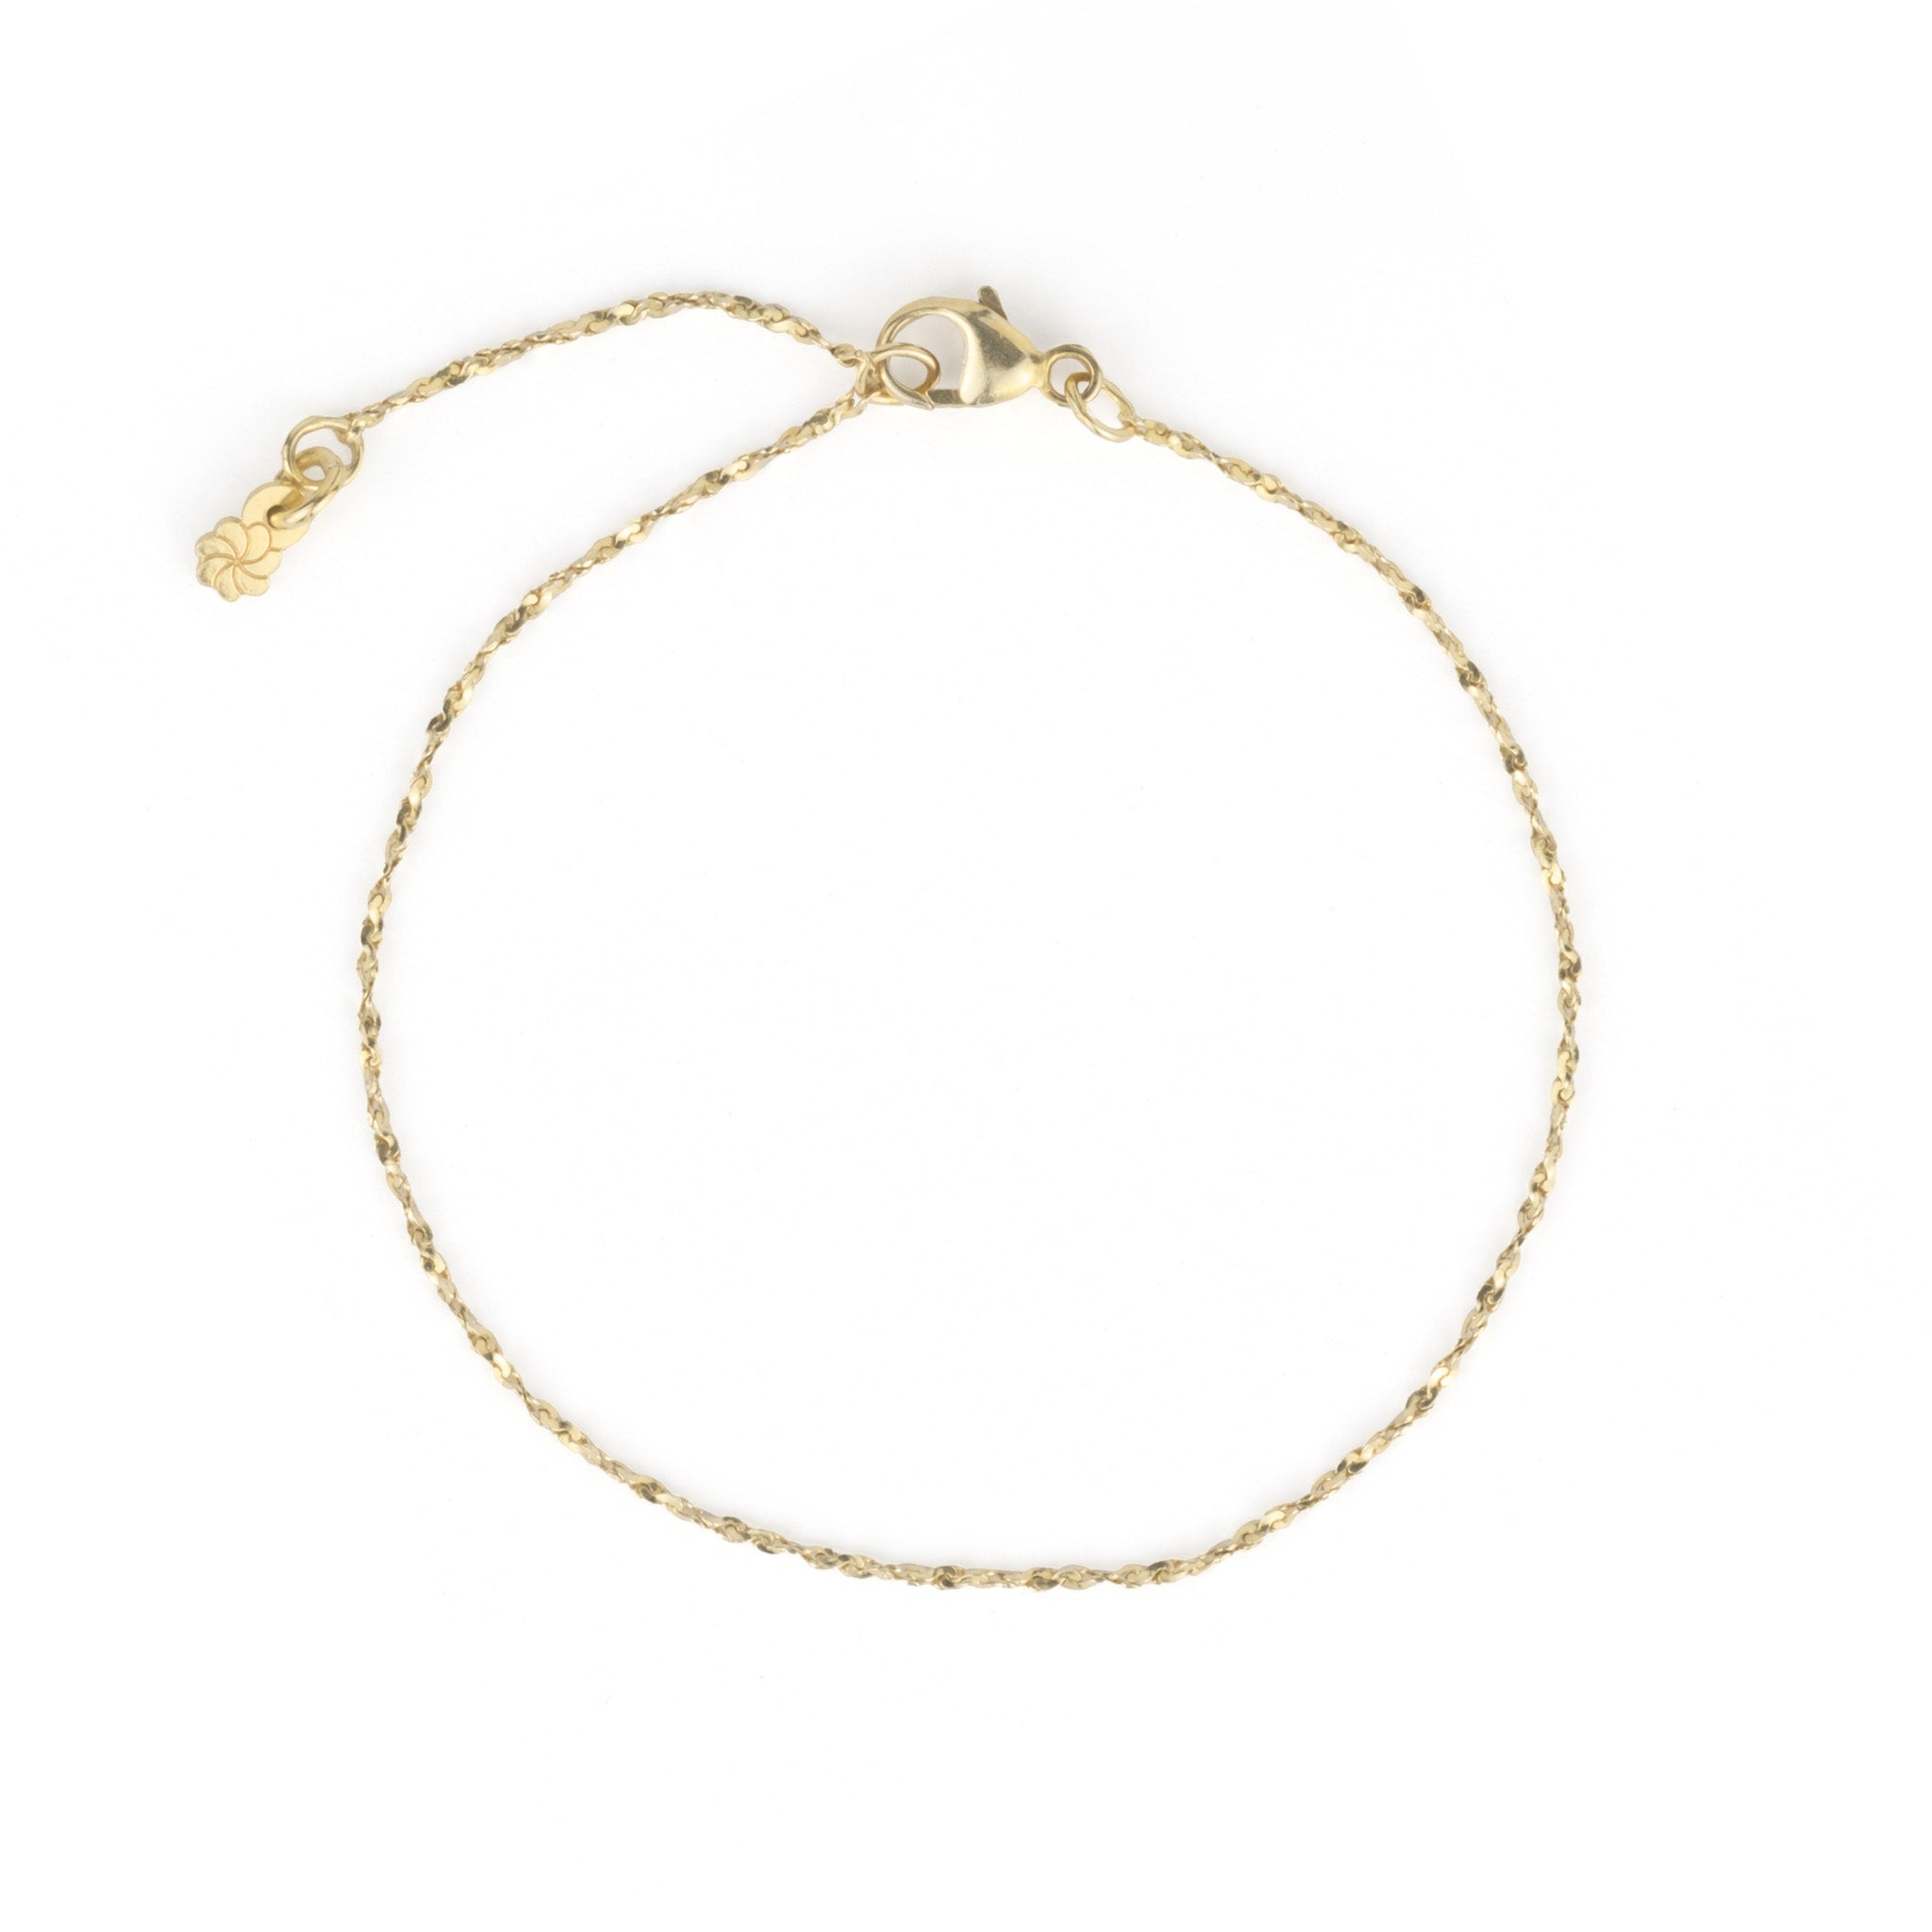 An Aiden Jae Starshine Chain Bracelet on a white background.